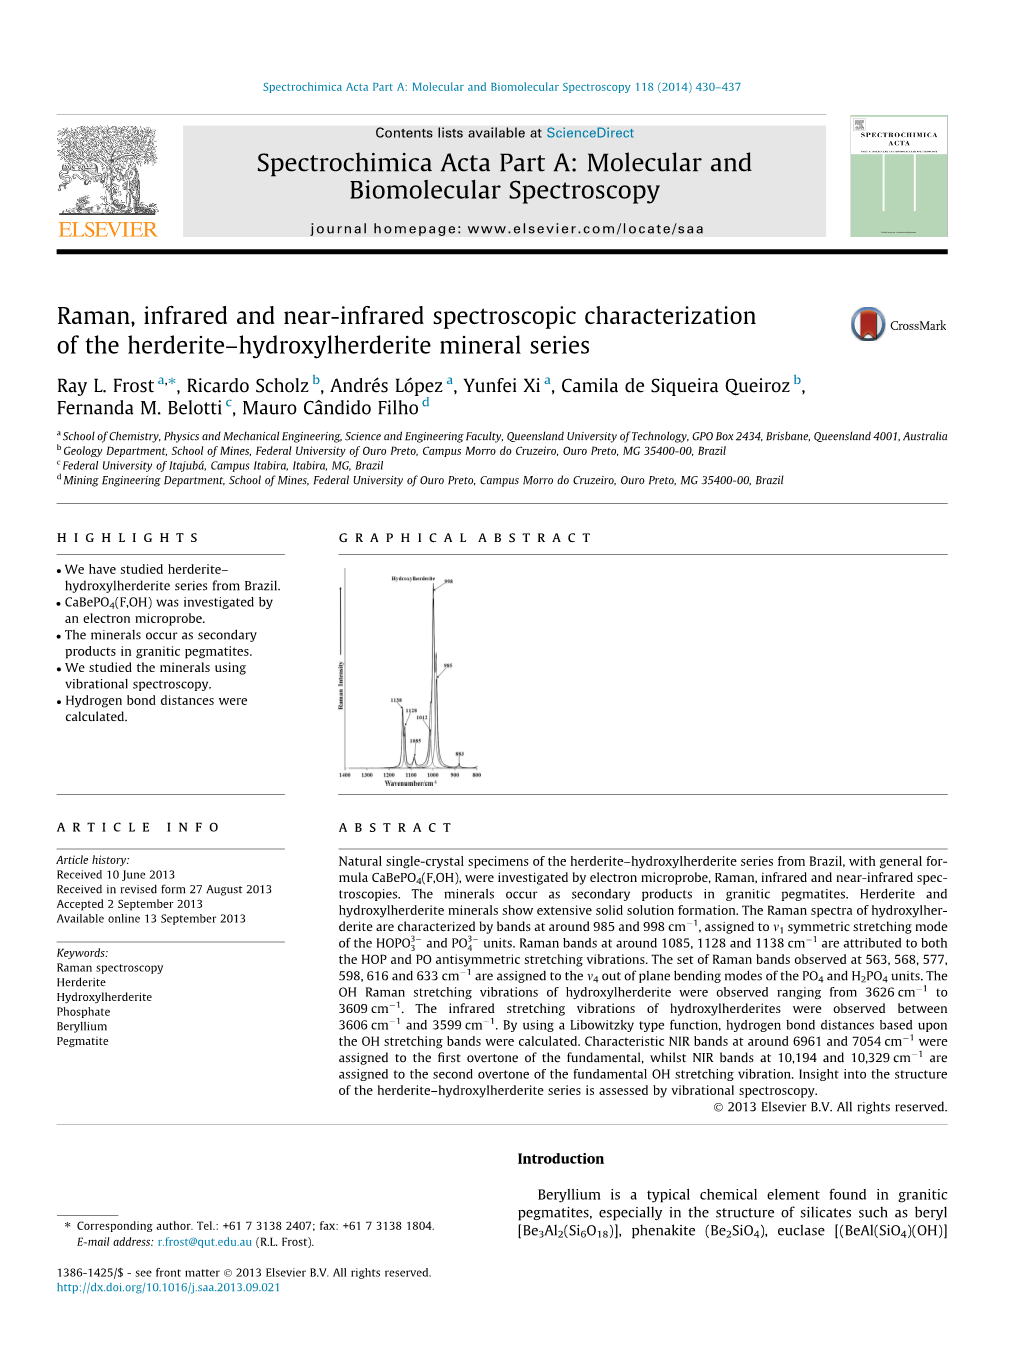 Molecular and Biomolecular Spectroscopy 118 (2014) 430–437